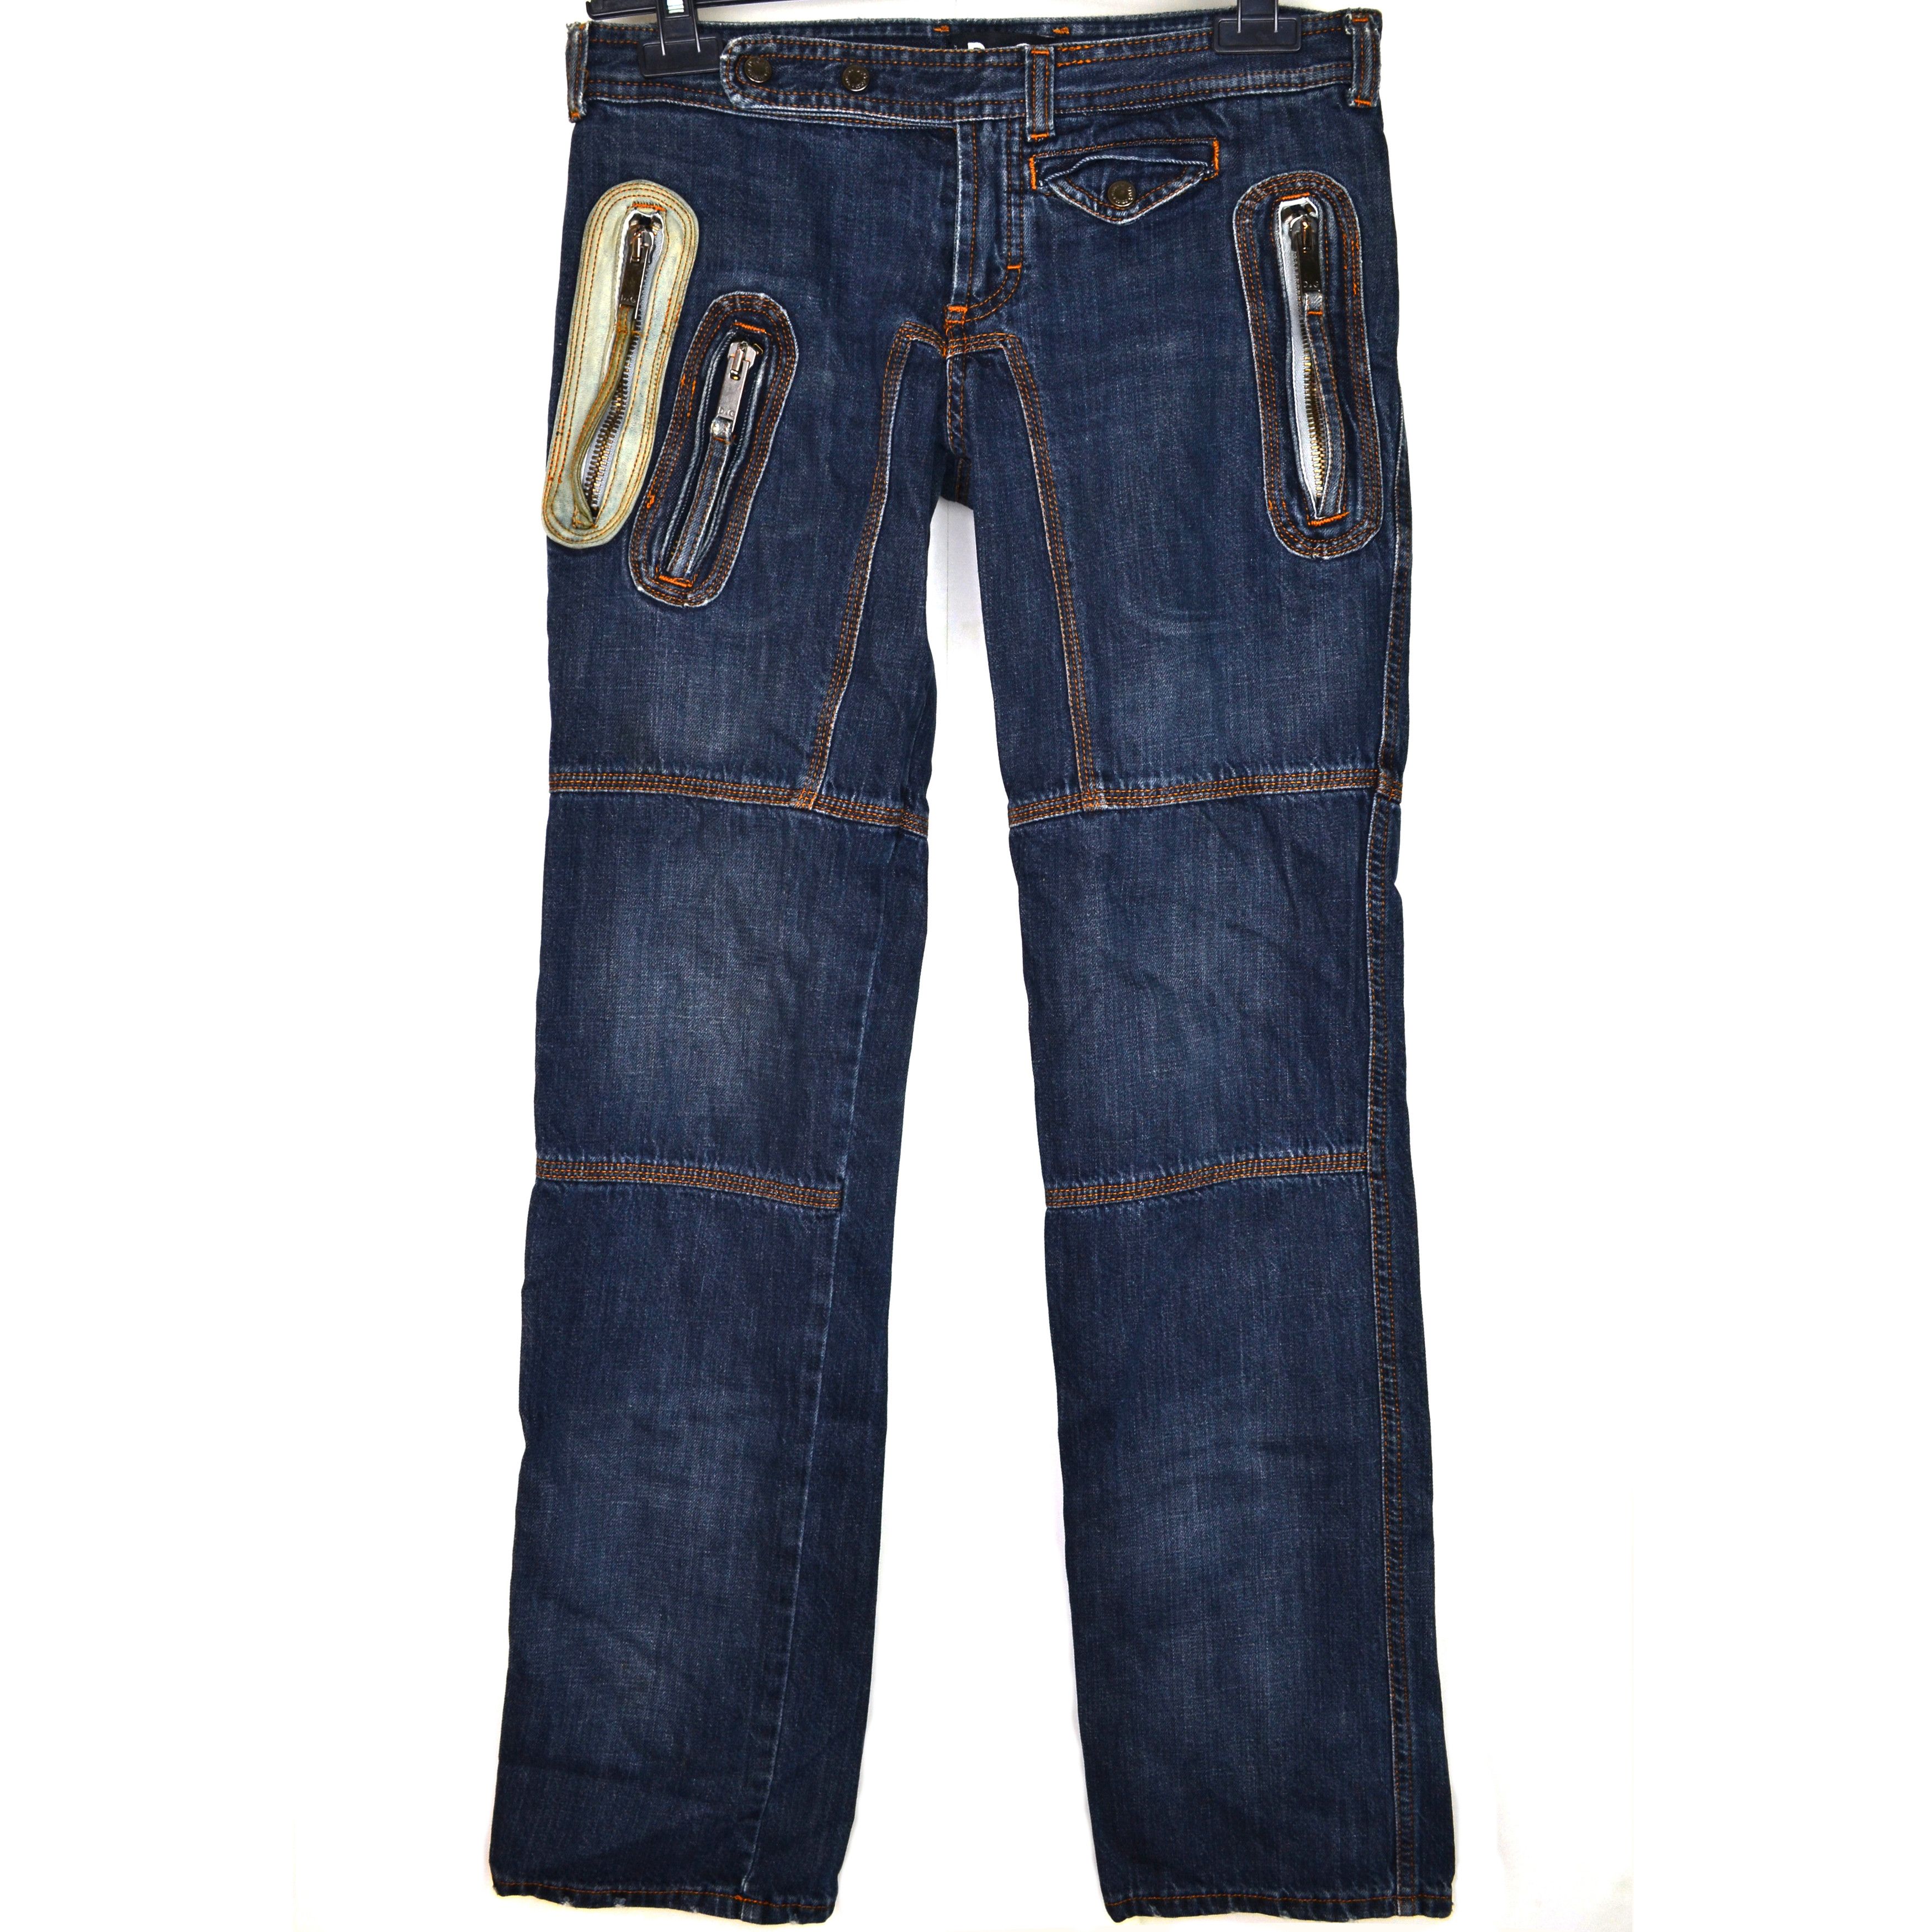 Pre-owned Biker Jeans X Dolce Gabbana Jeans Denim D&g Pants 2003 Zip Leather